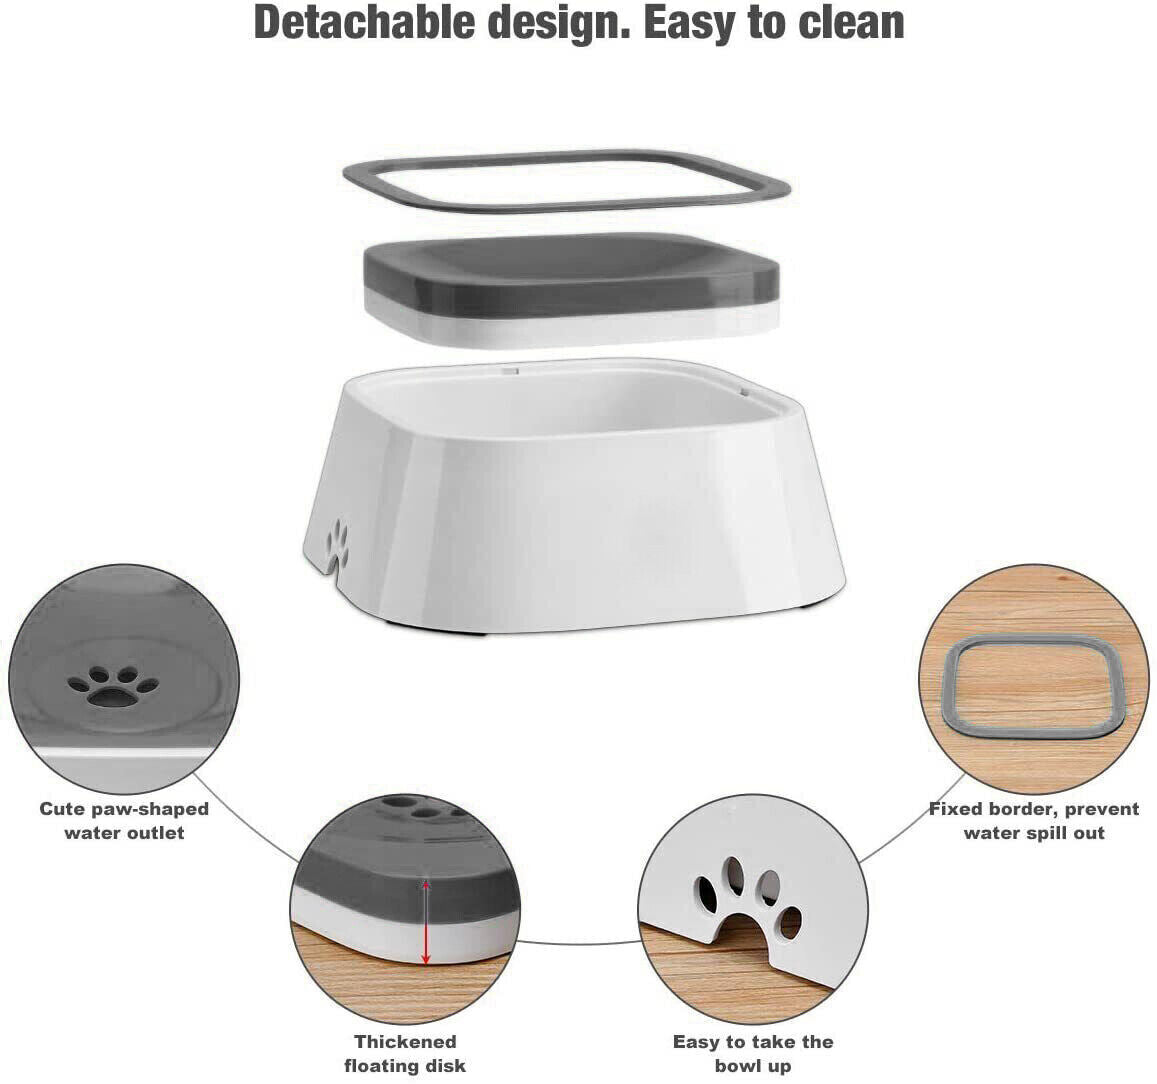 1.5L Pet Dog Cat Water Bowl No Spill Slow Feeder Dispenser Dust Free Non-Skip